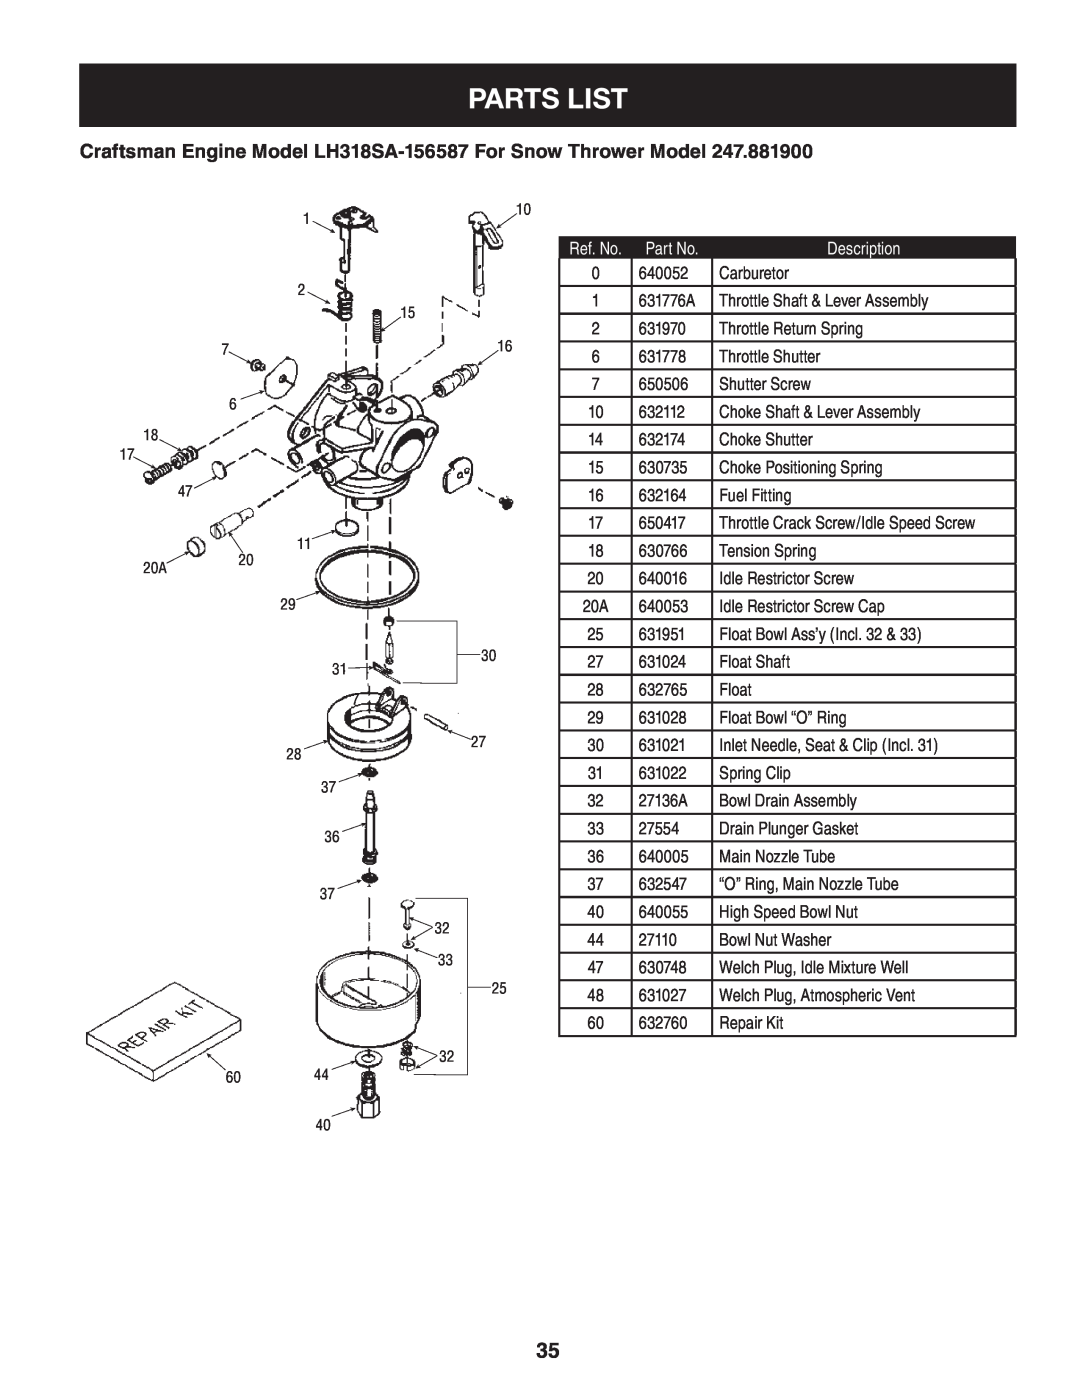 Craftsman 247.8819 operating instructions Parts List, Part No, Description, 640052 